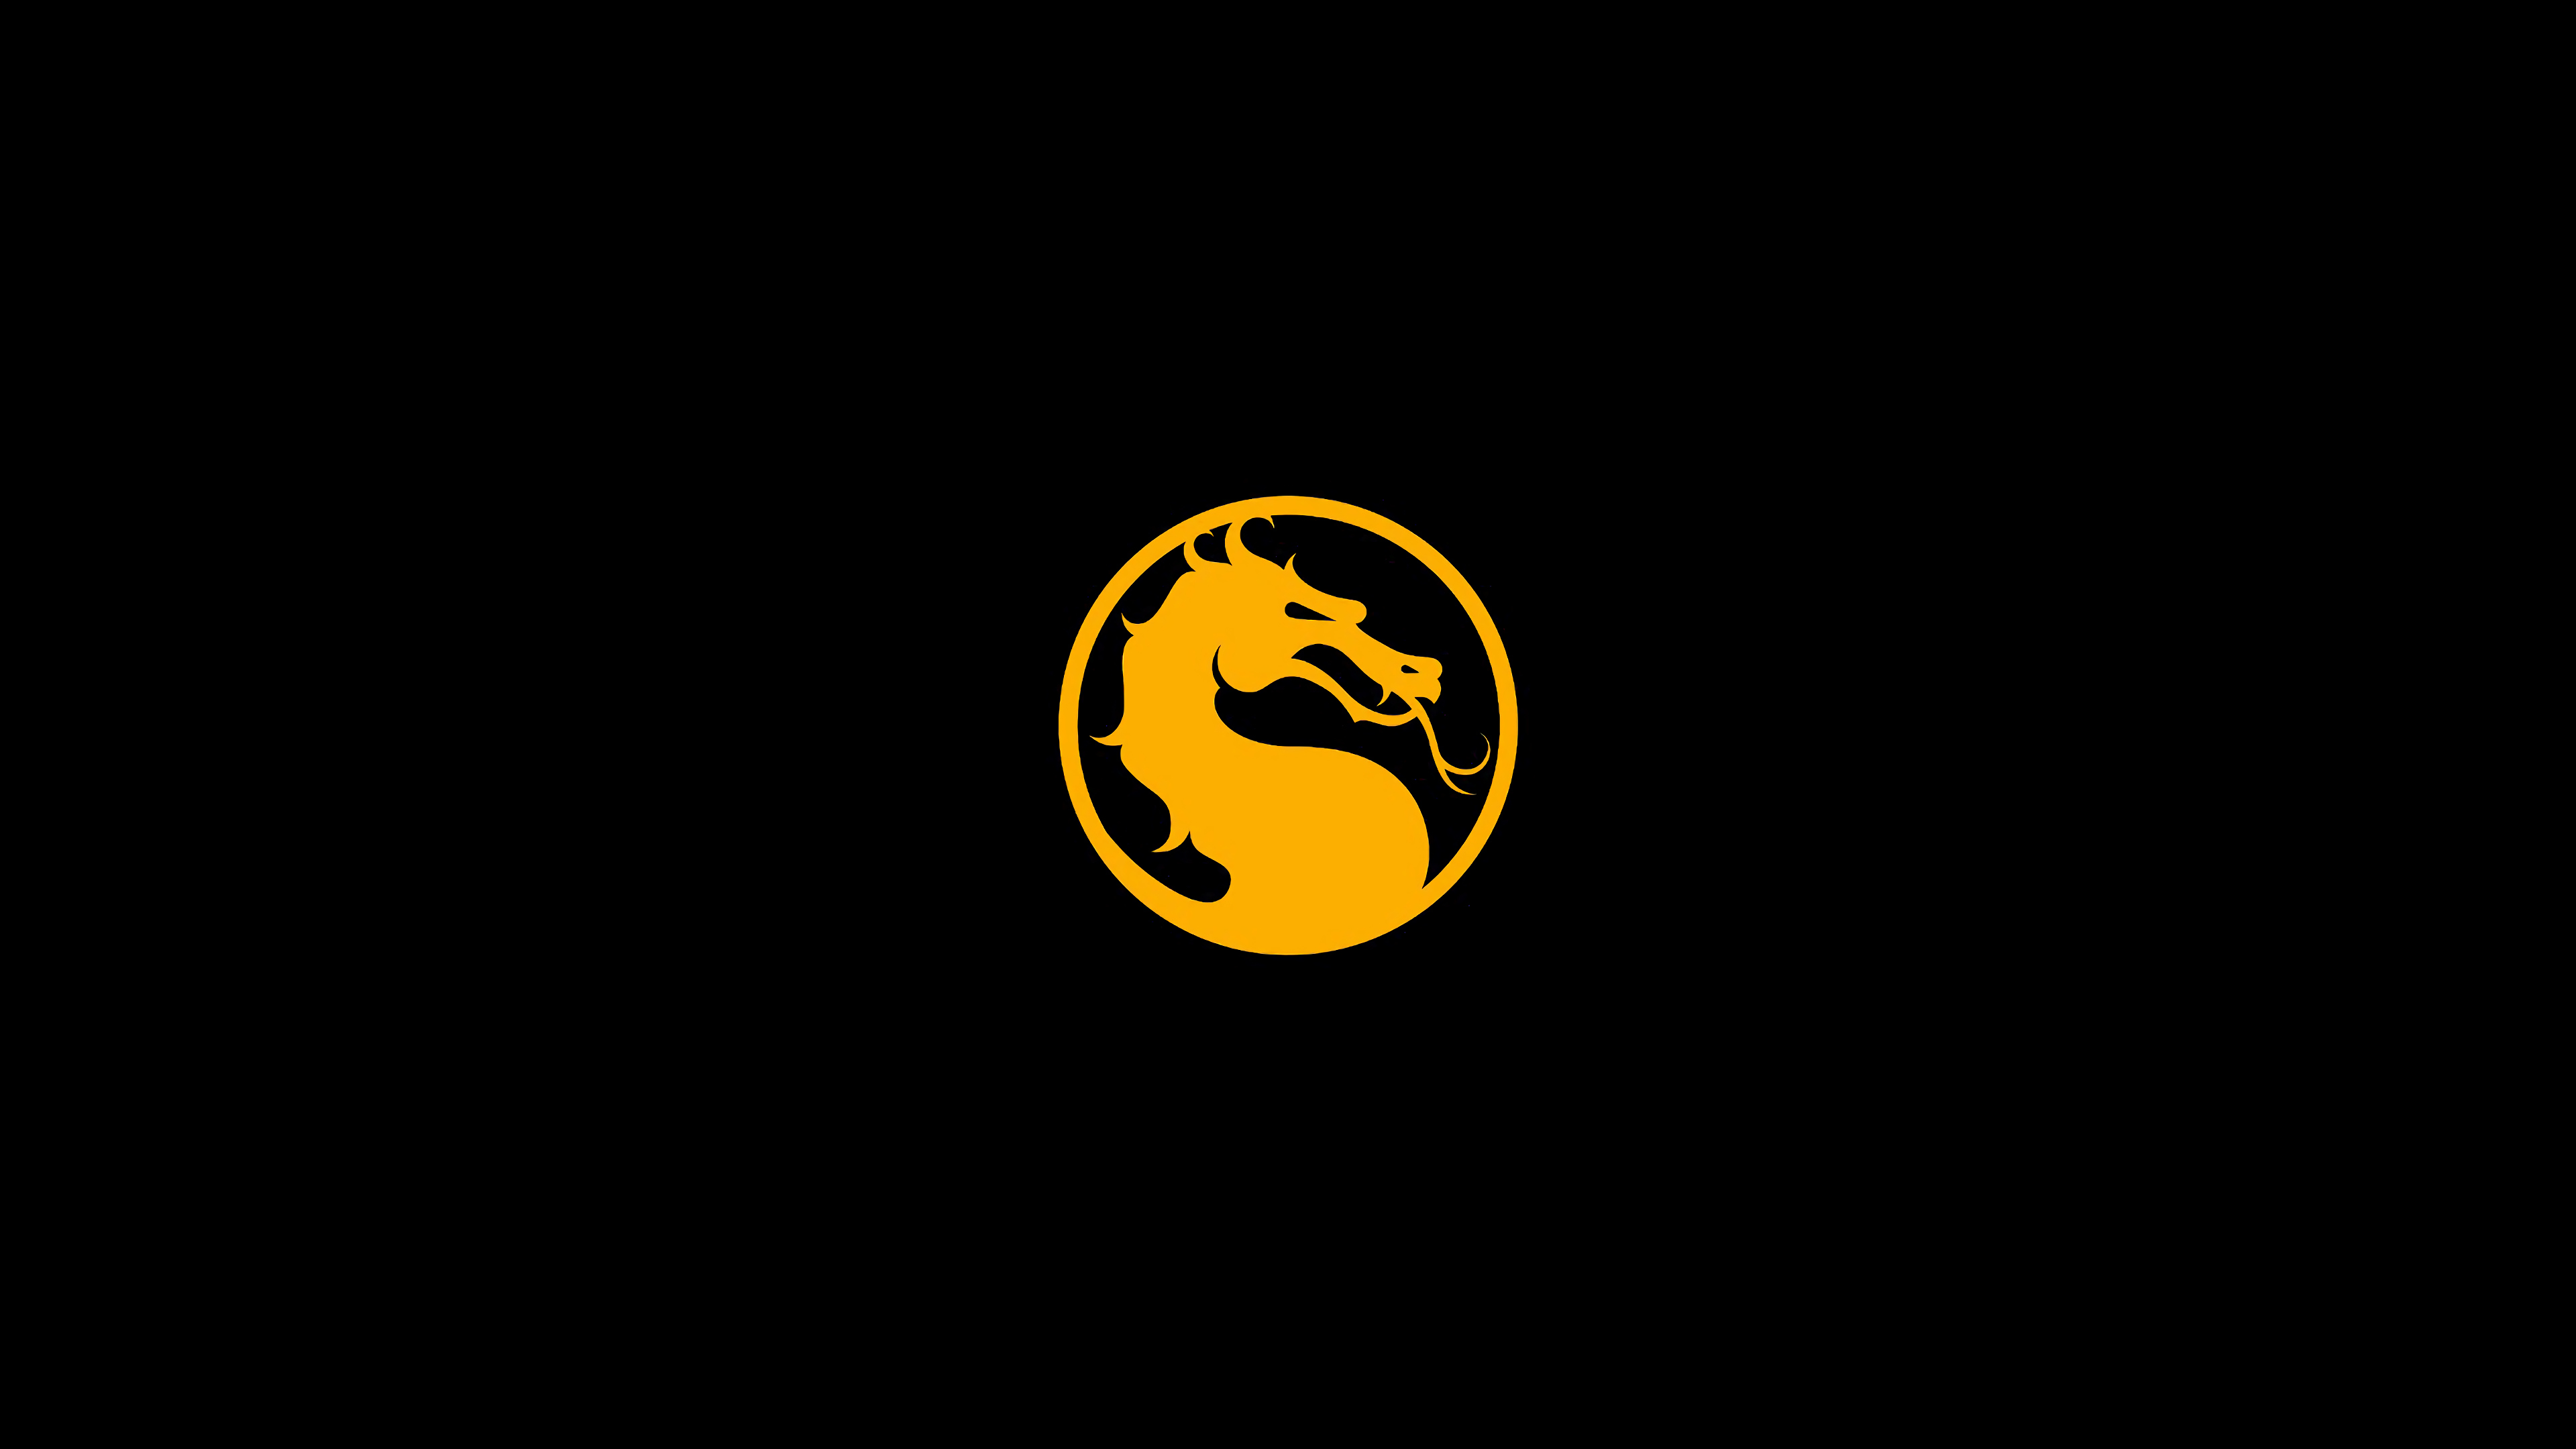 Mortal Kombat 11 wallpaper - Logo with the dragon » Mortal Kombat games